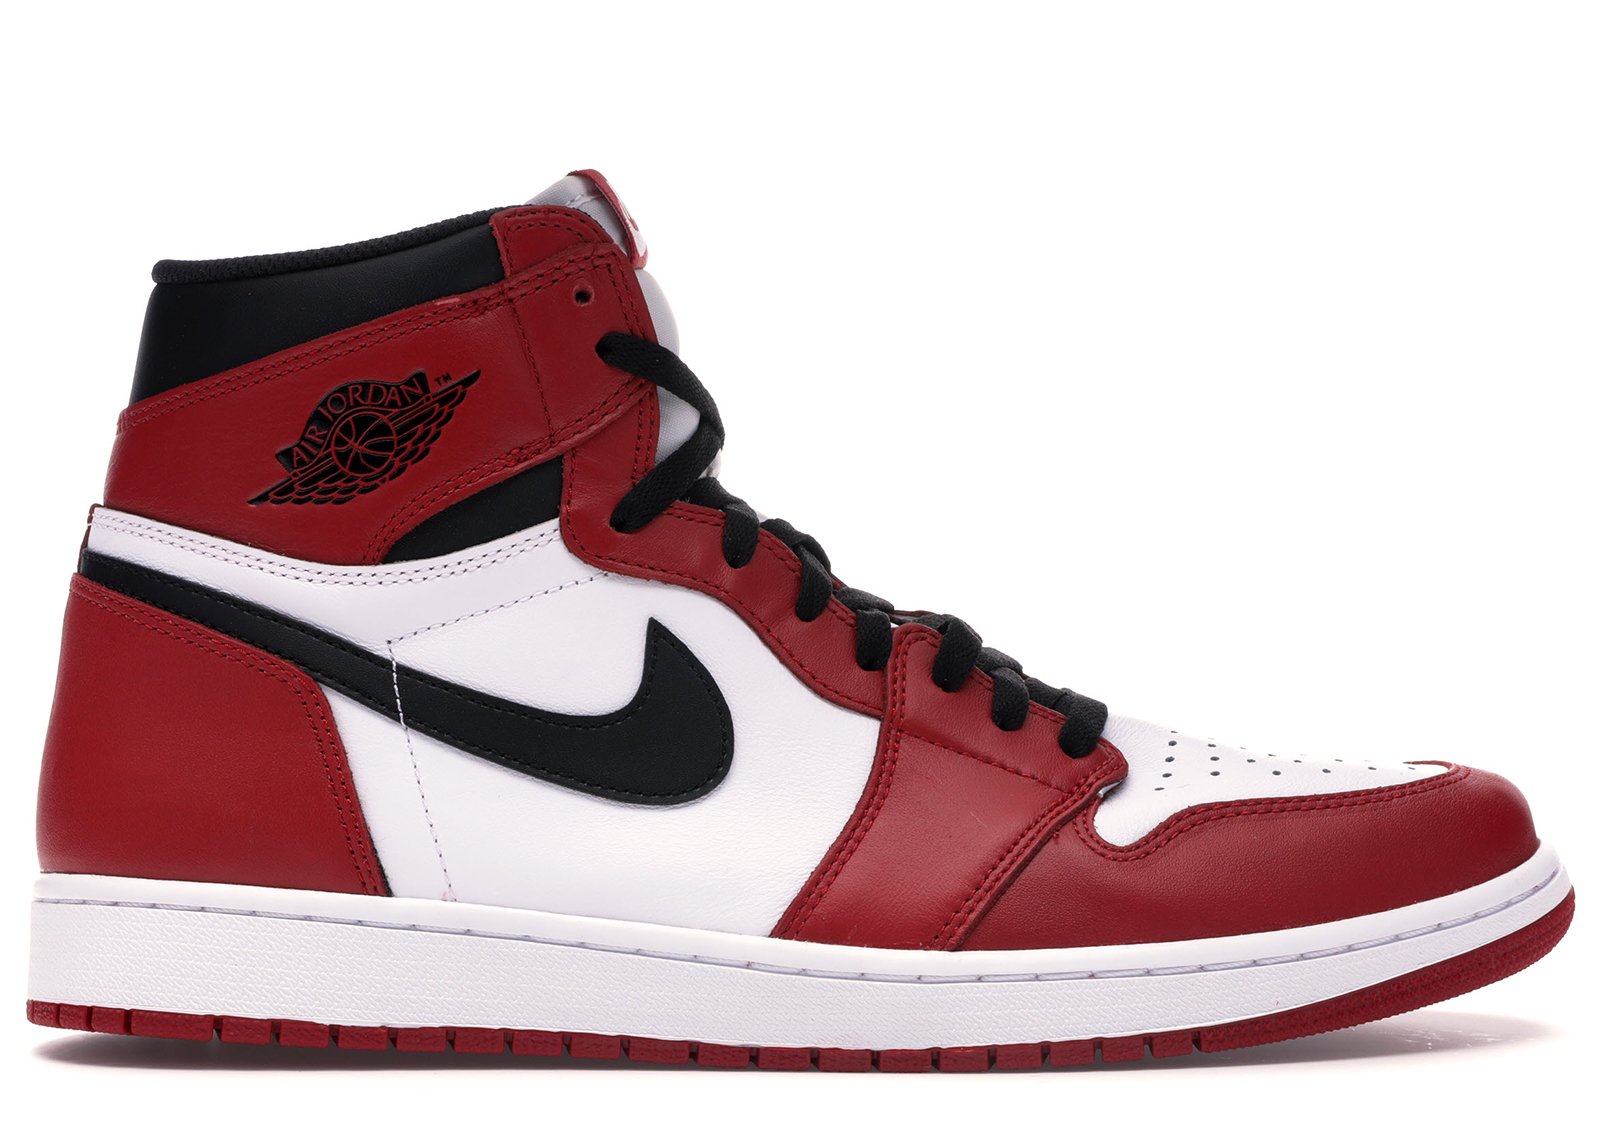 Jordan 1 Retro Chicago (2015) sneakers